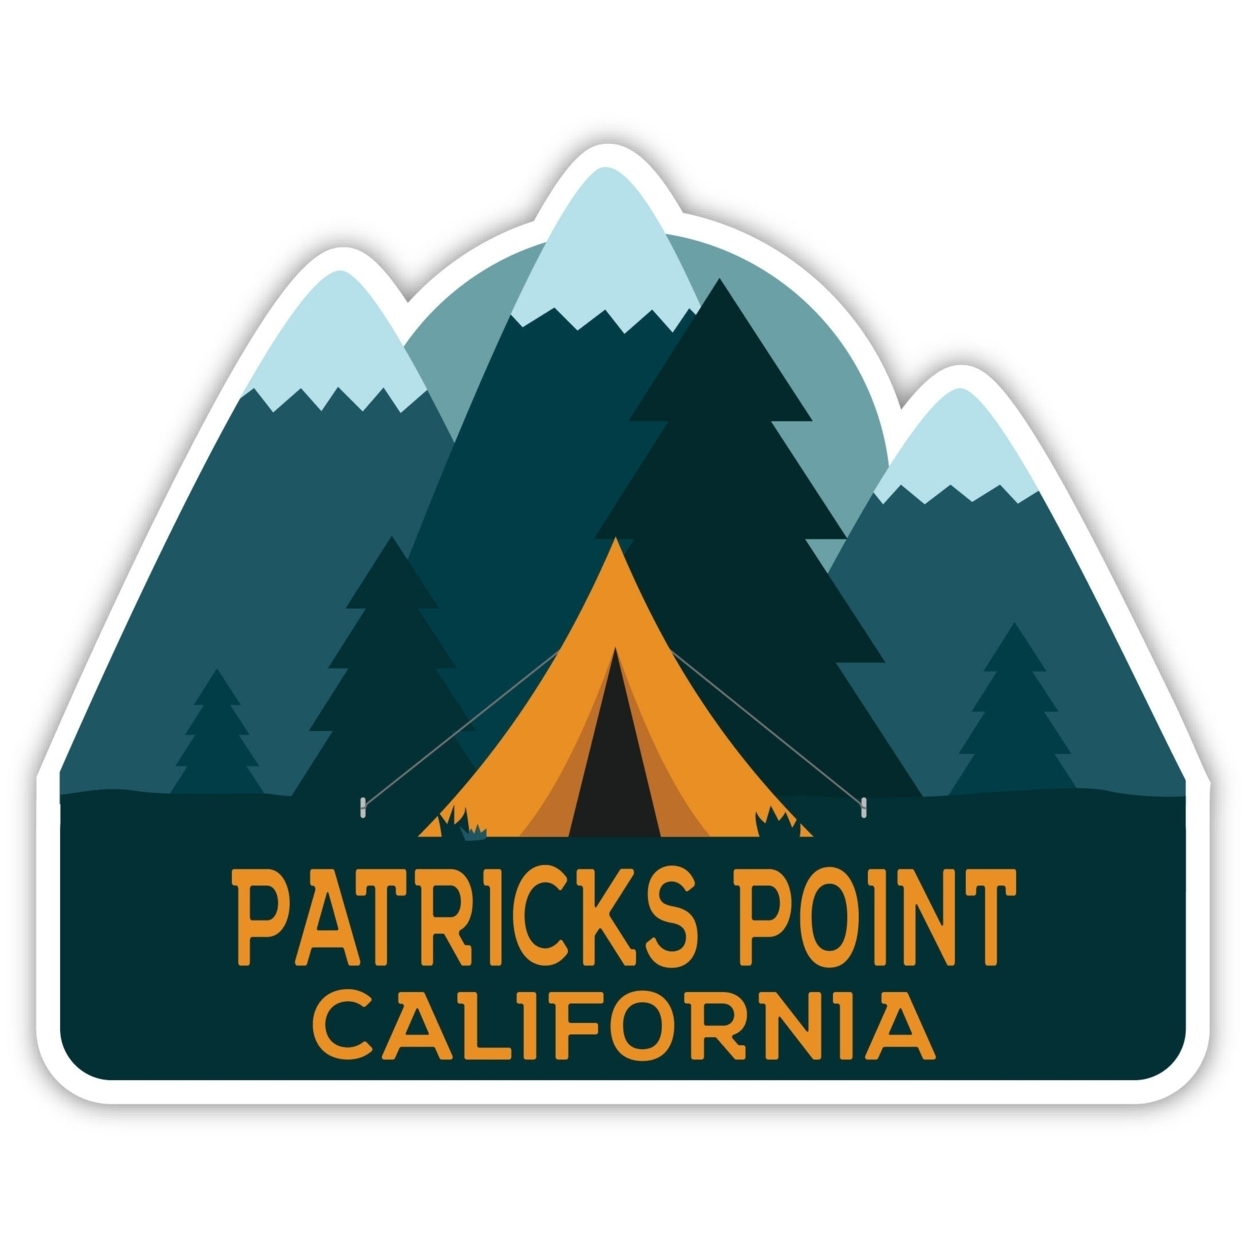 Patricks Point California Souvenir Decorative Stickers (Choose Theme And Size) - Single Unit, 4-Inch, Tent